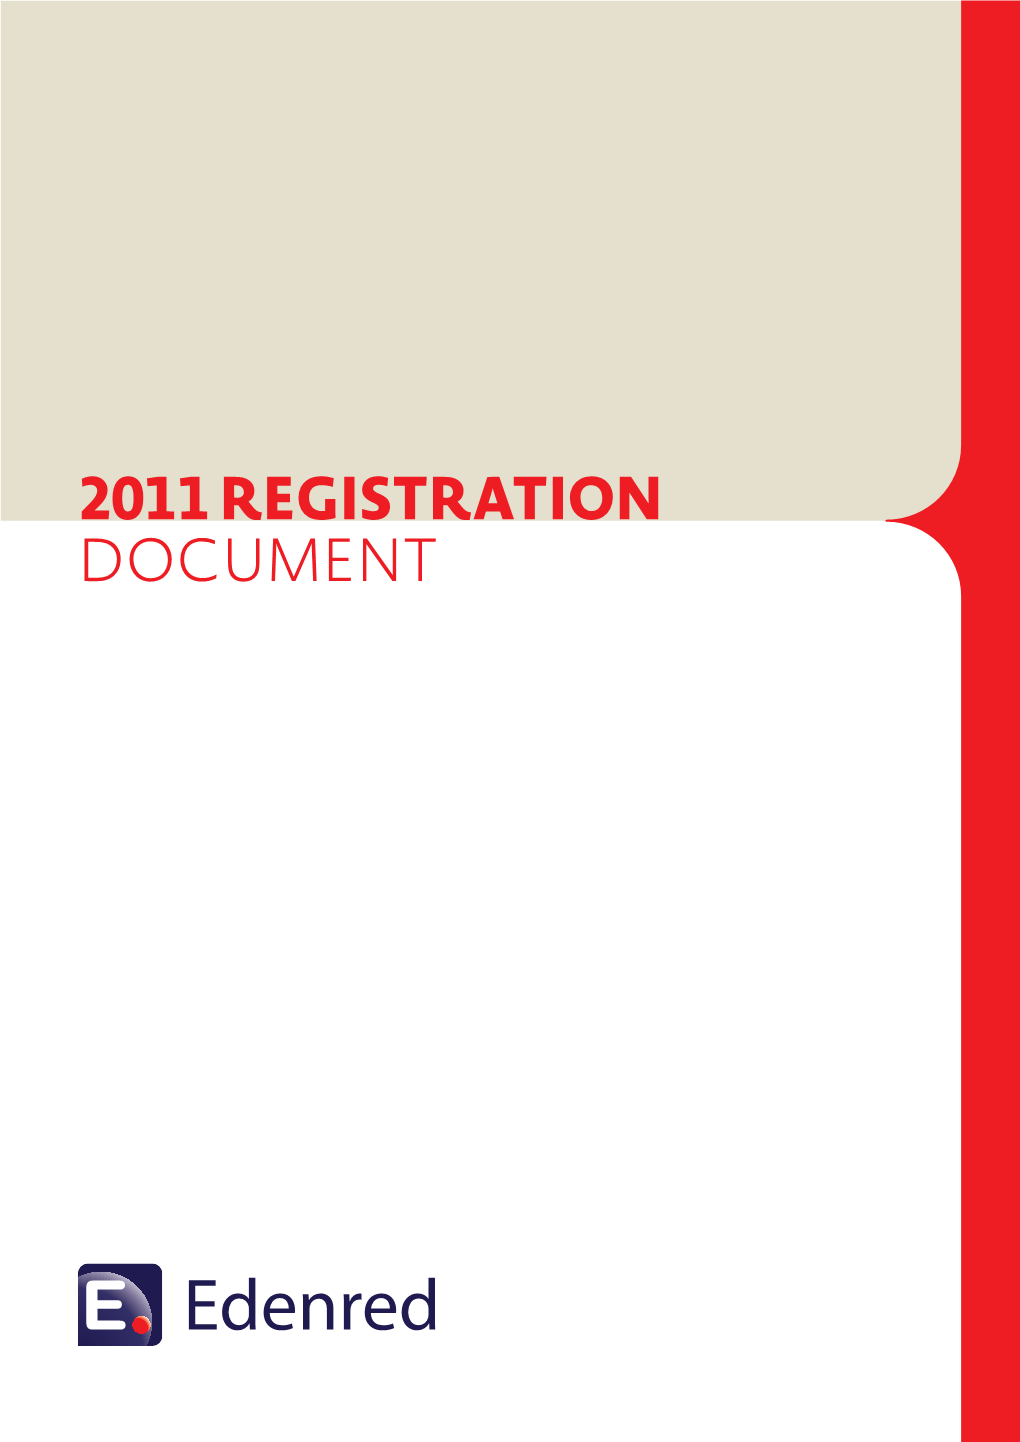 2011 Registration Document Summary